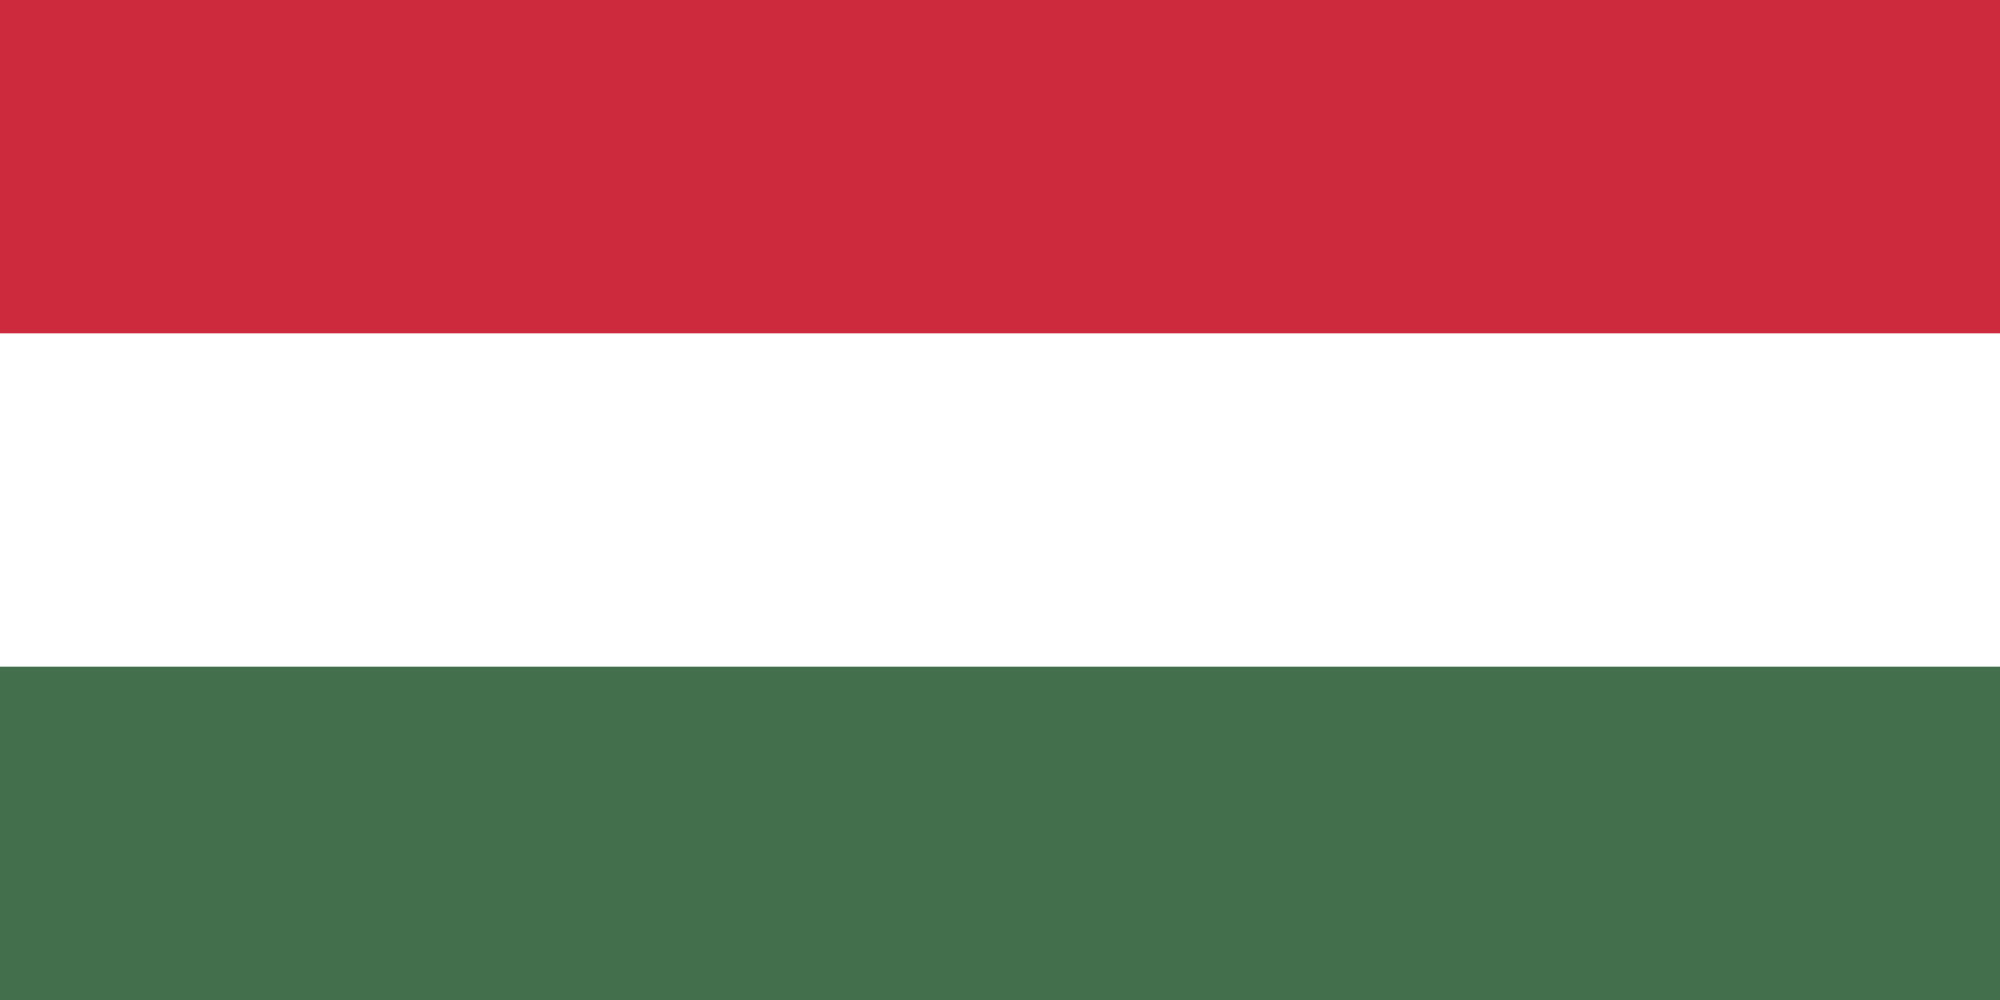 Hungarian Flag Added To My Sidebar